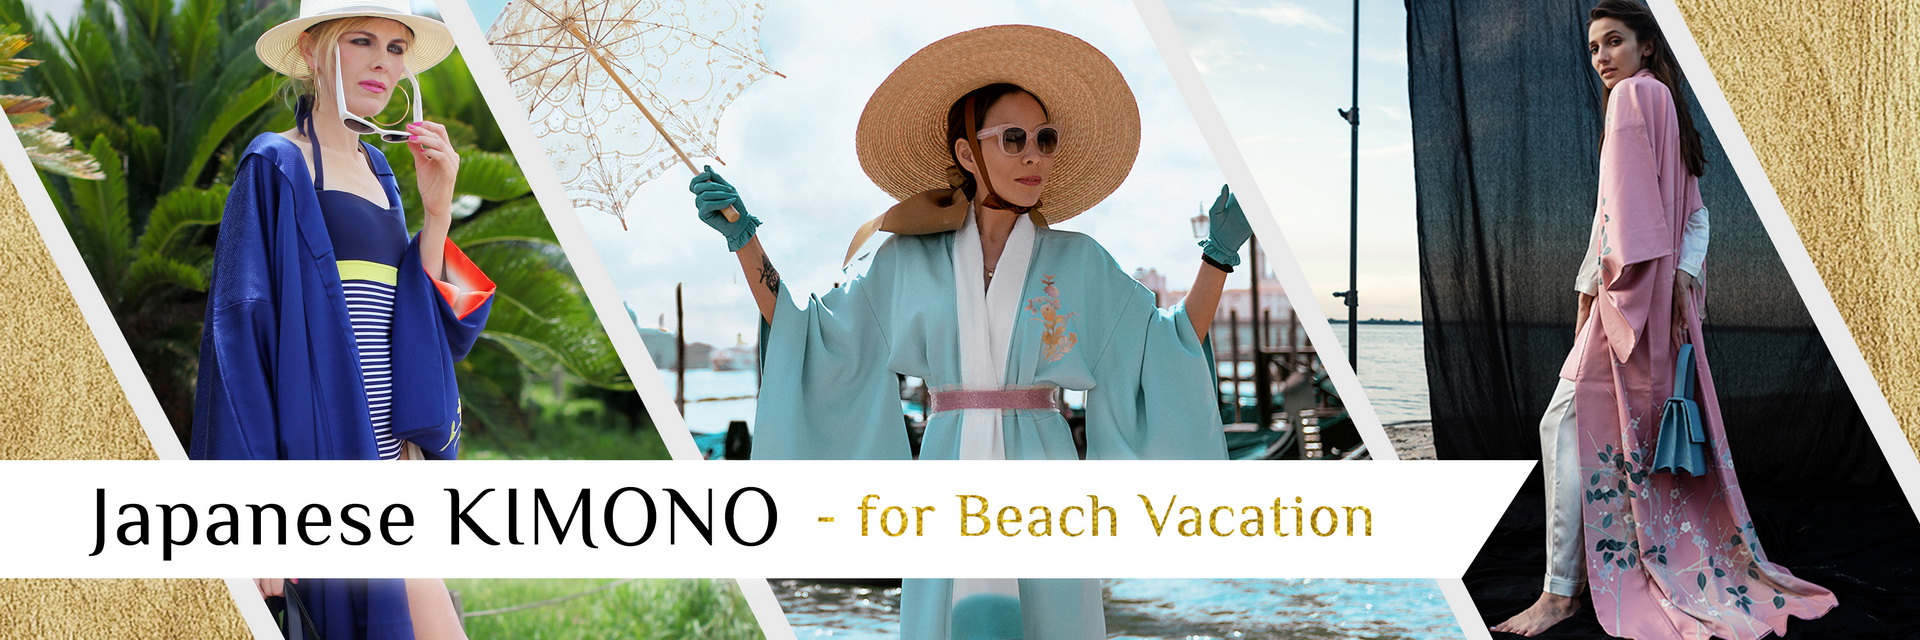 Kimono for Beach Vacation